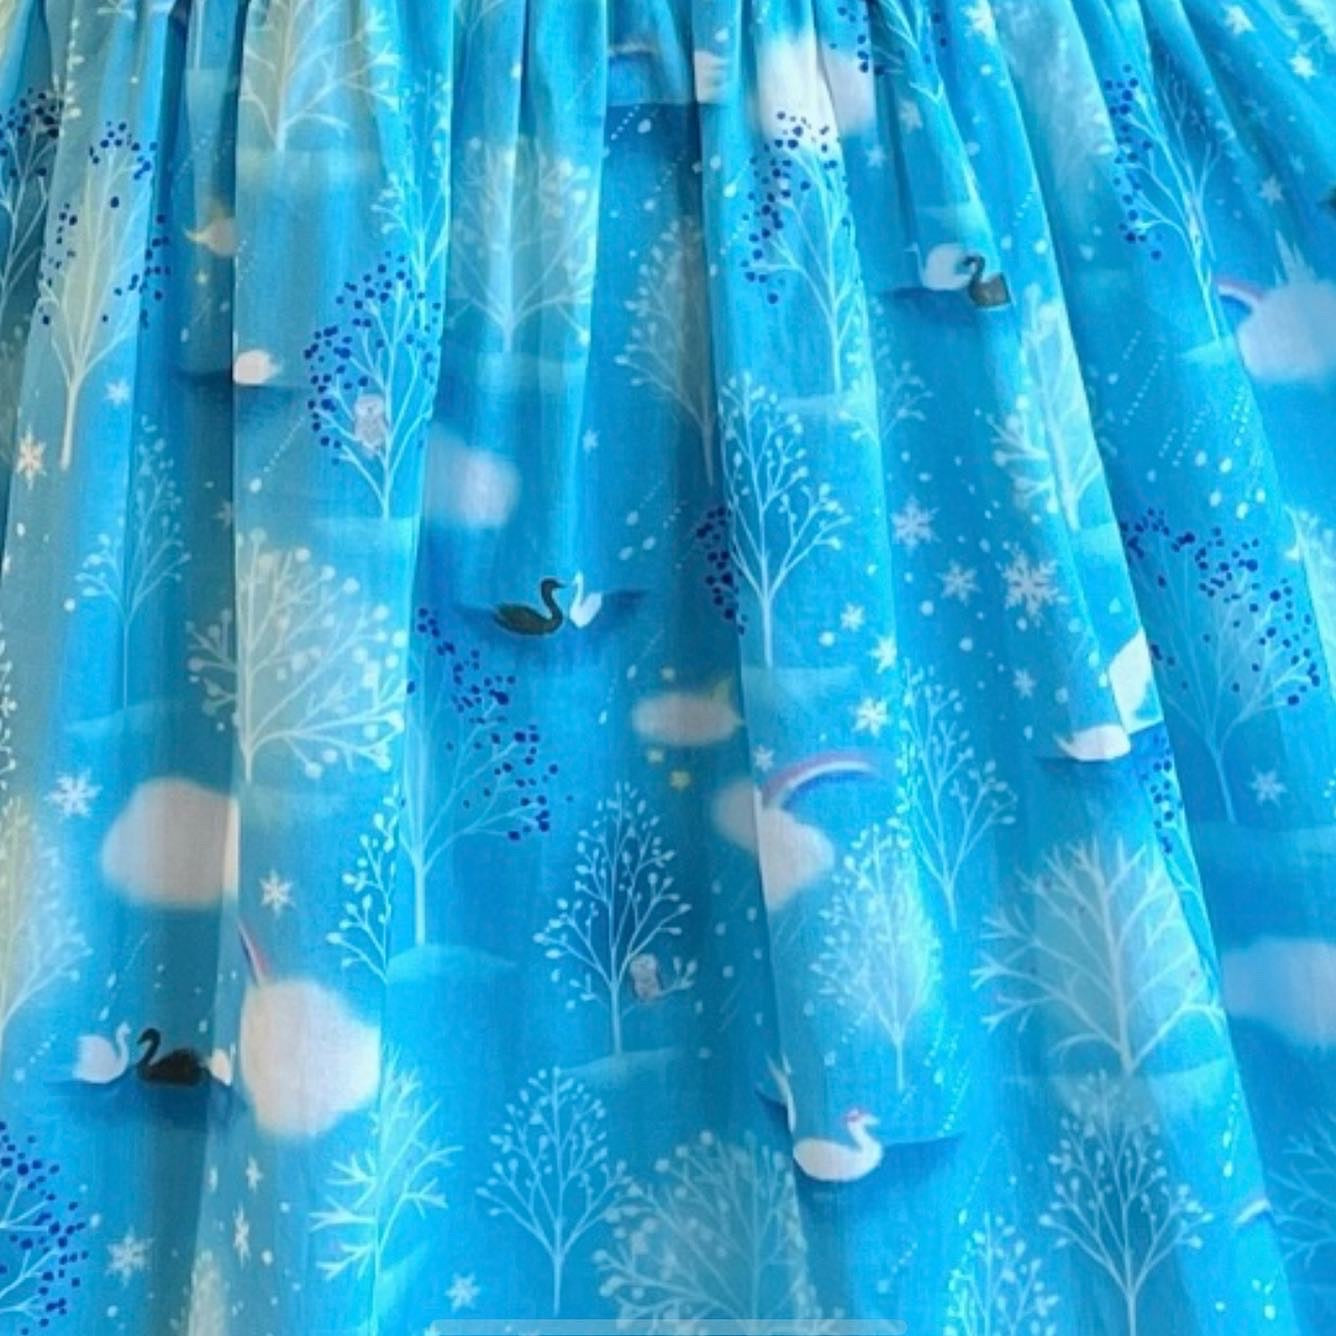 Dreamy Blue Swan Lake Midi Skirt